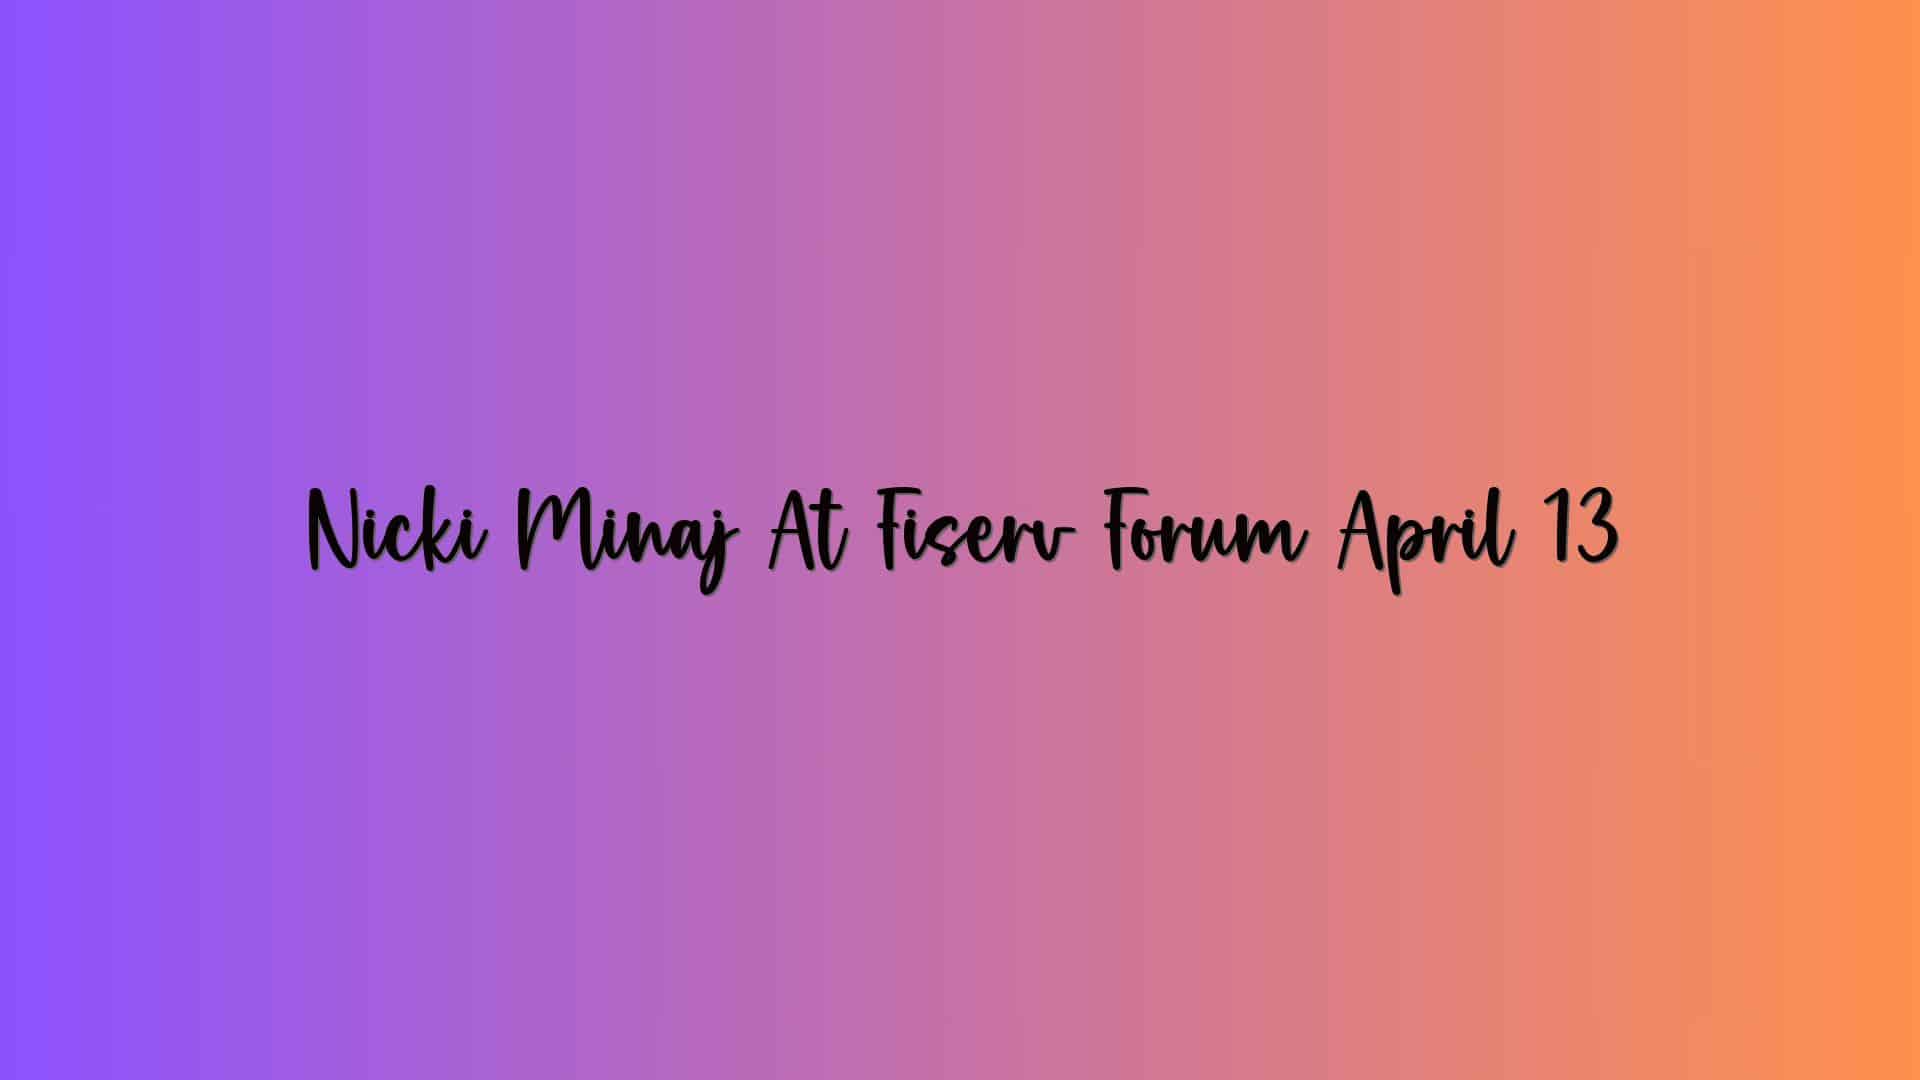 Nicki Minaj At Fiserv Forum April 13